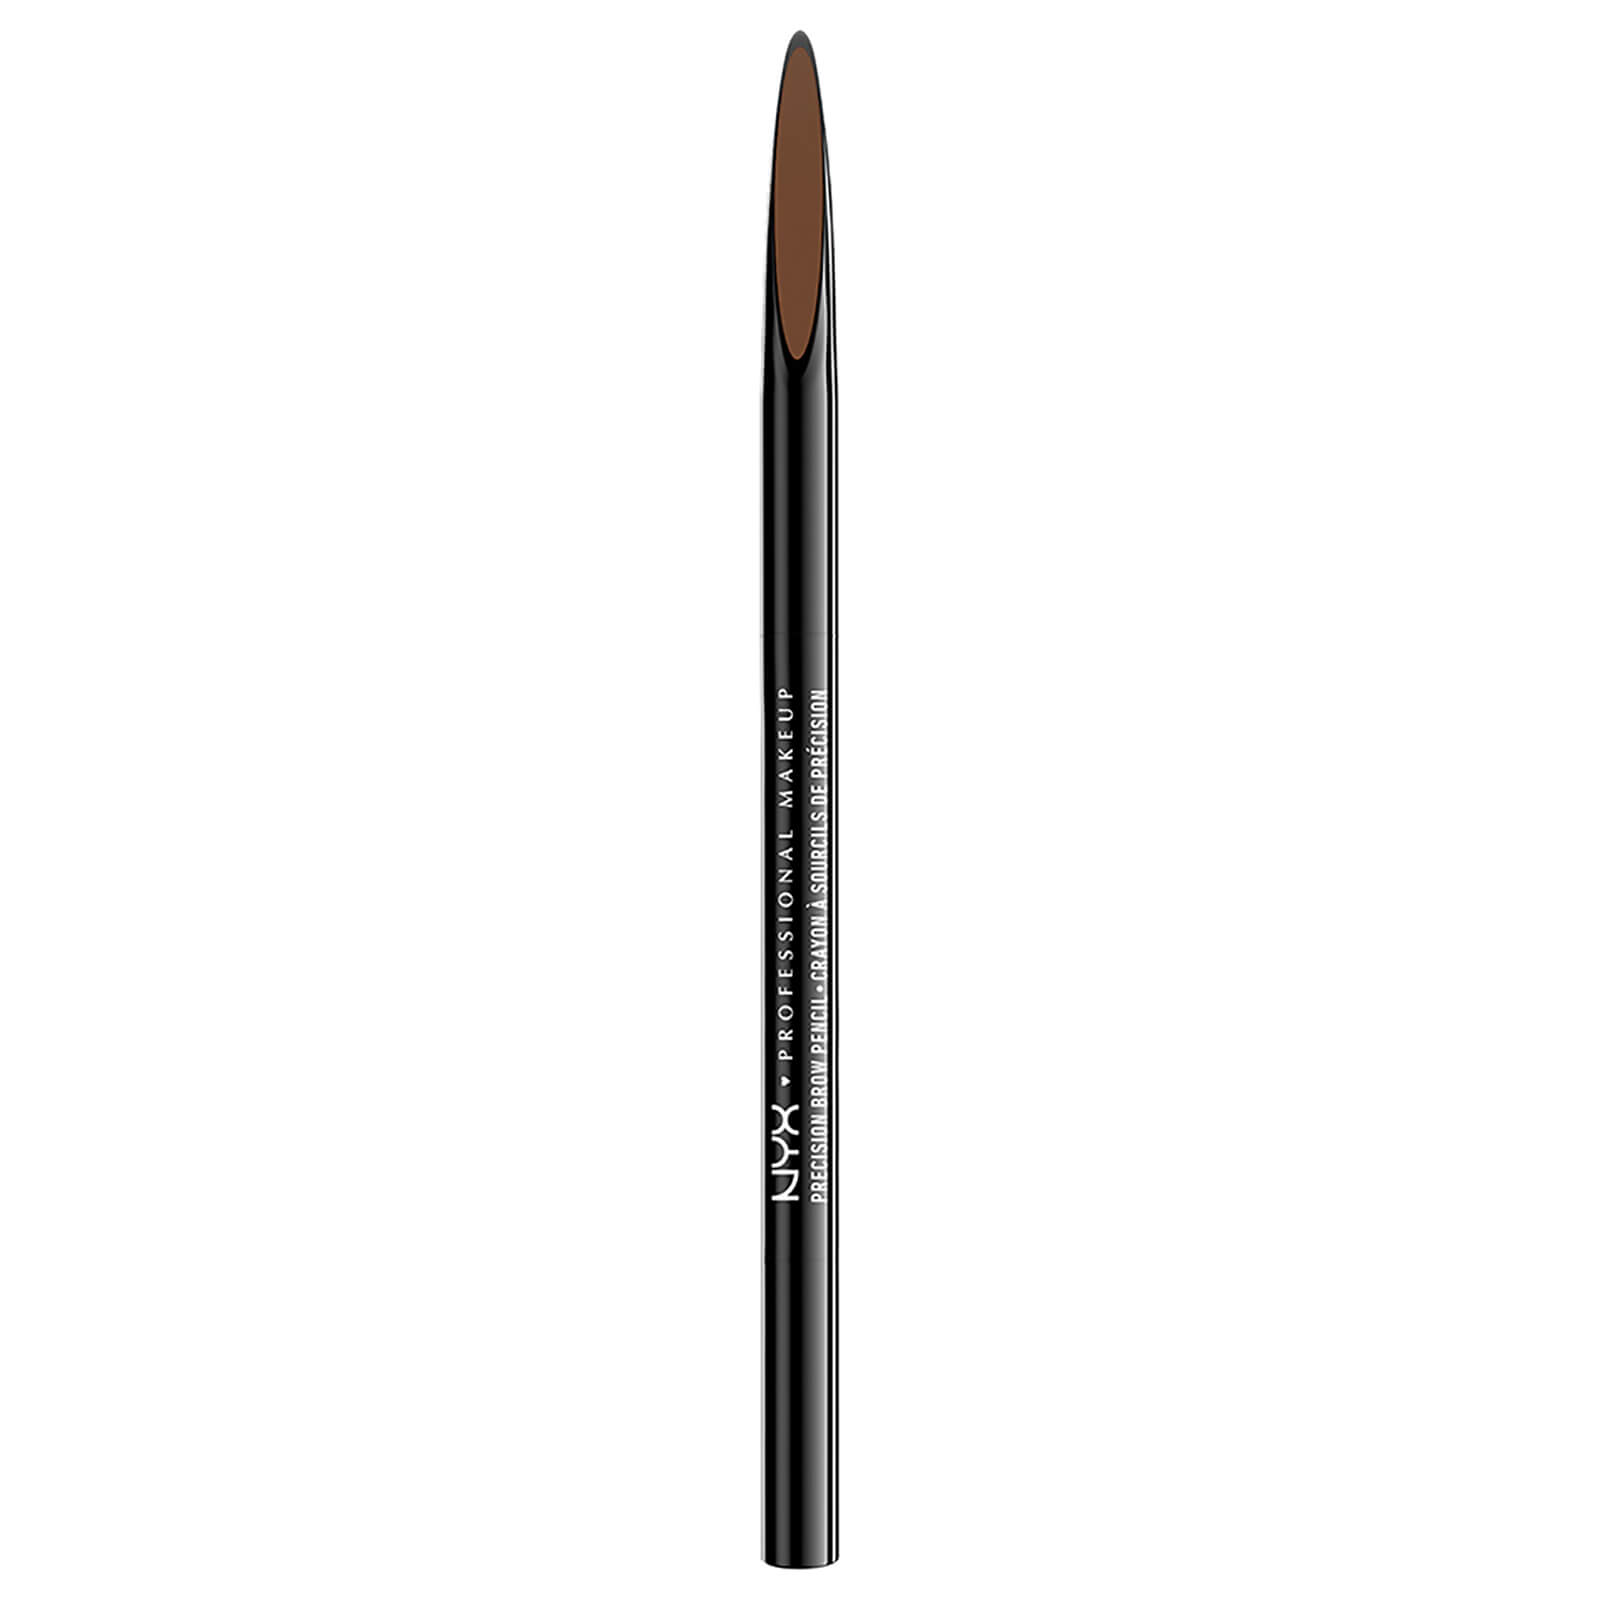 NYX Professional Makeup Precision Brow Pencil 9.3g (Various Shades) - Brown